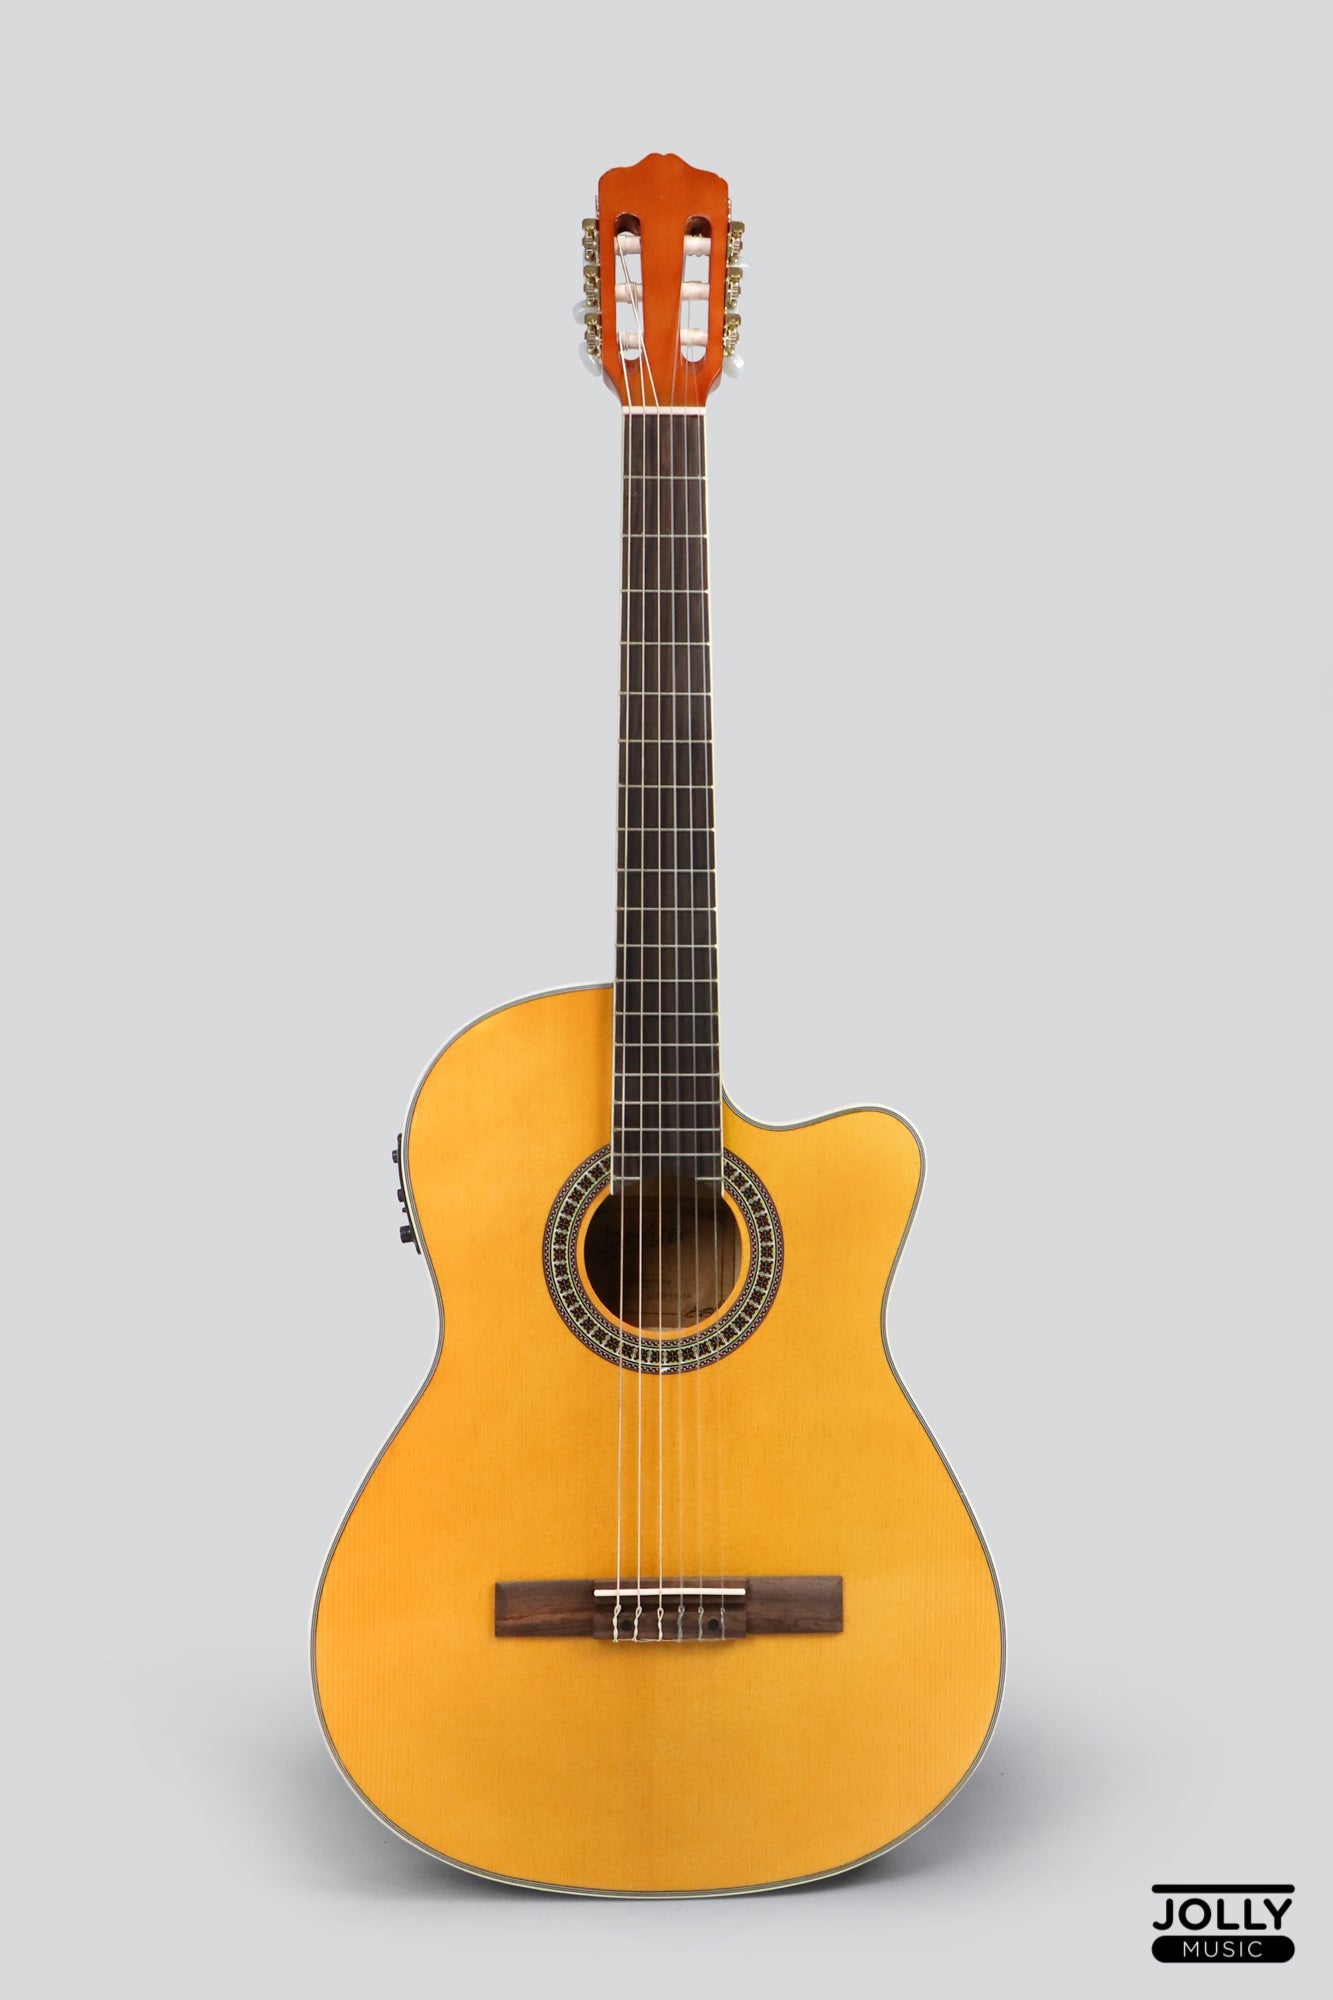 Deviser L-330-39-YN EQ Classical Guitar (Natural) with Pickup